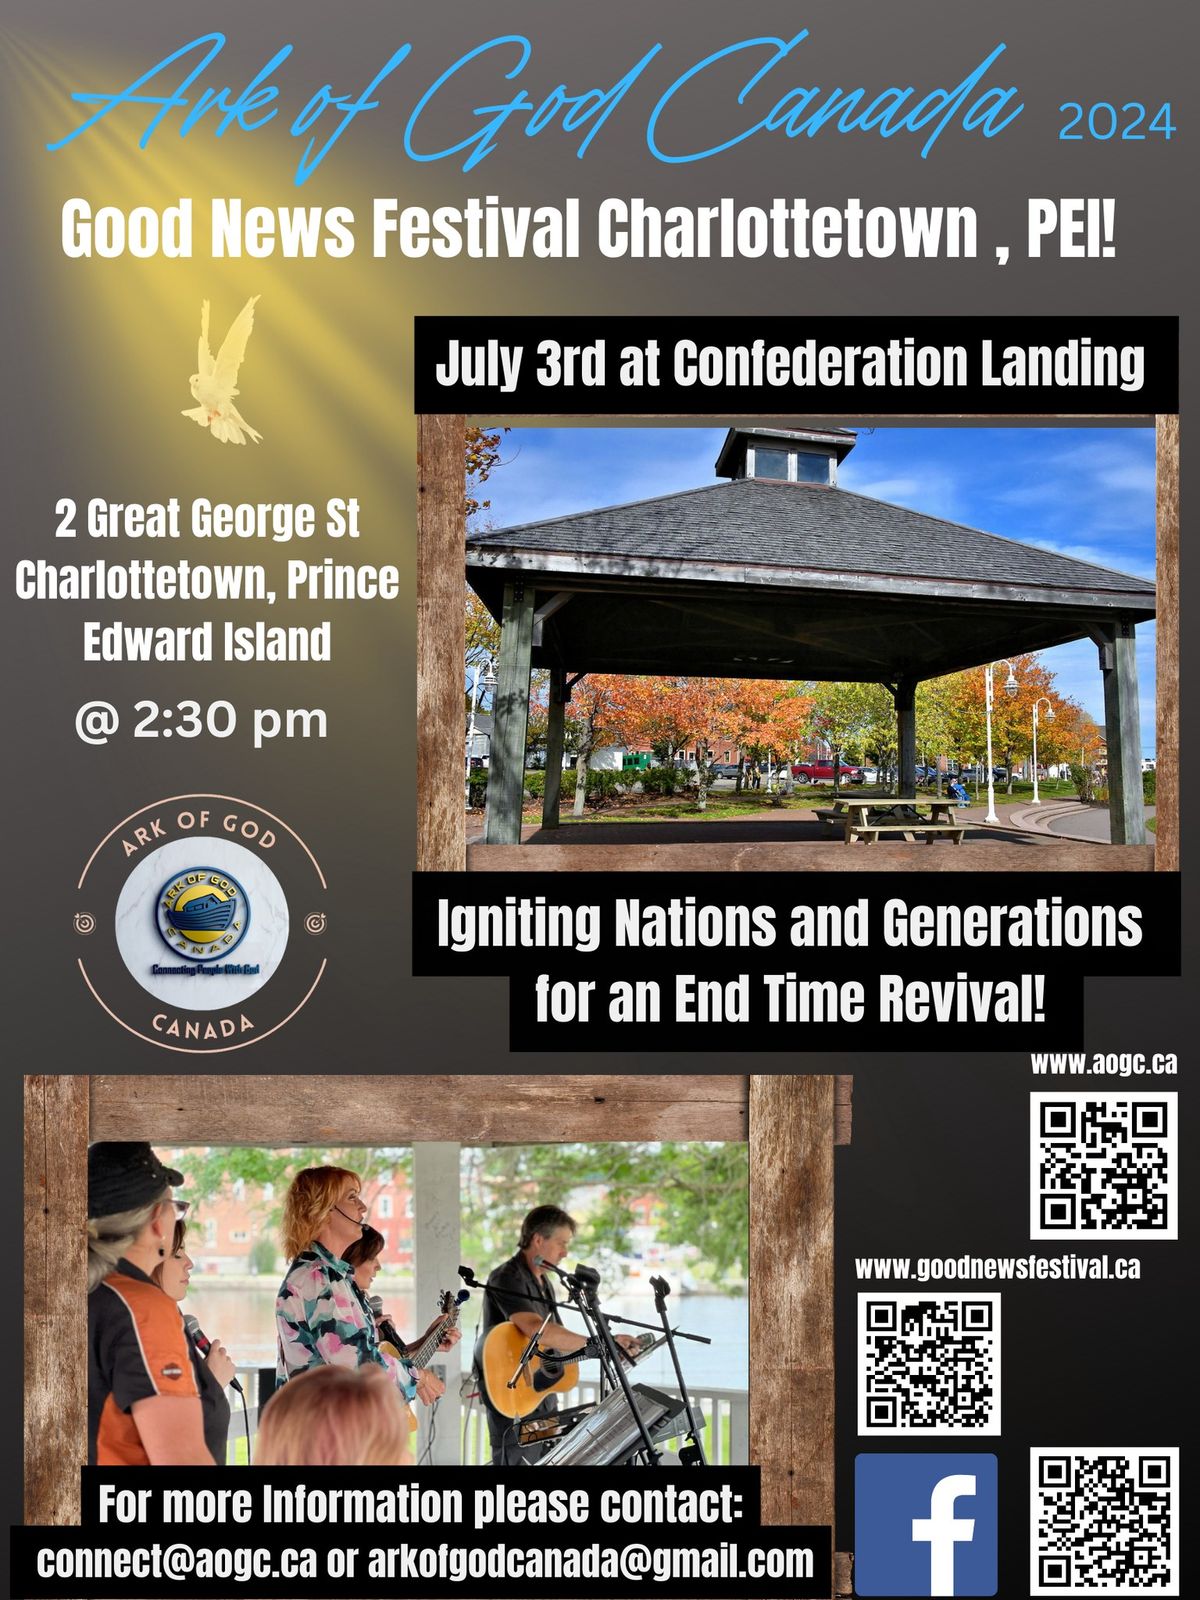 Good News Festival Charlottetown! PEI